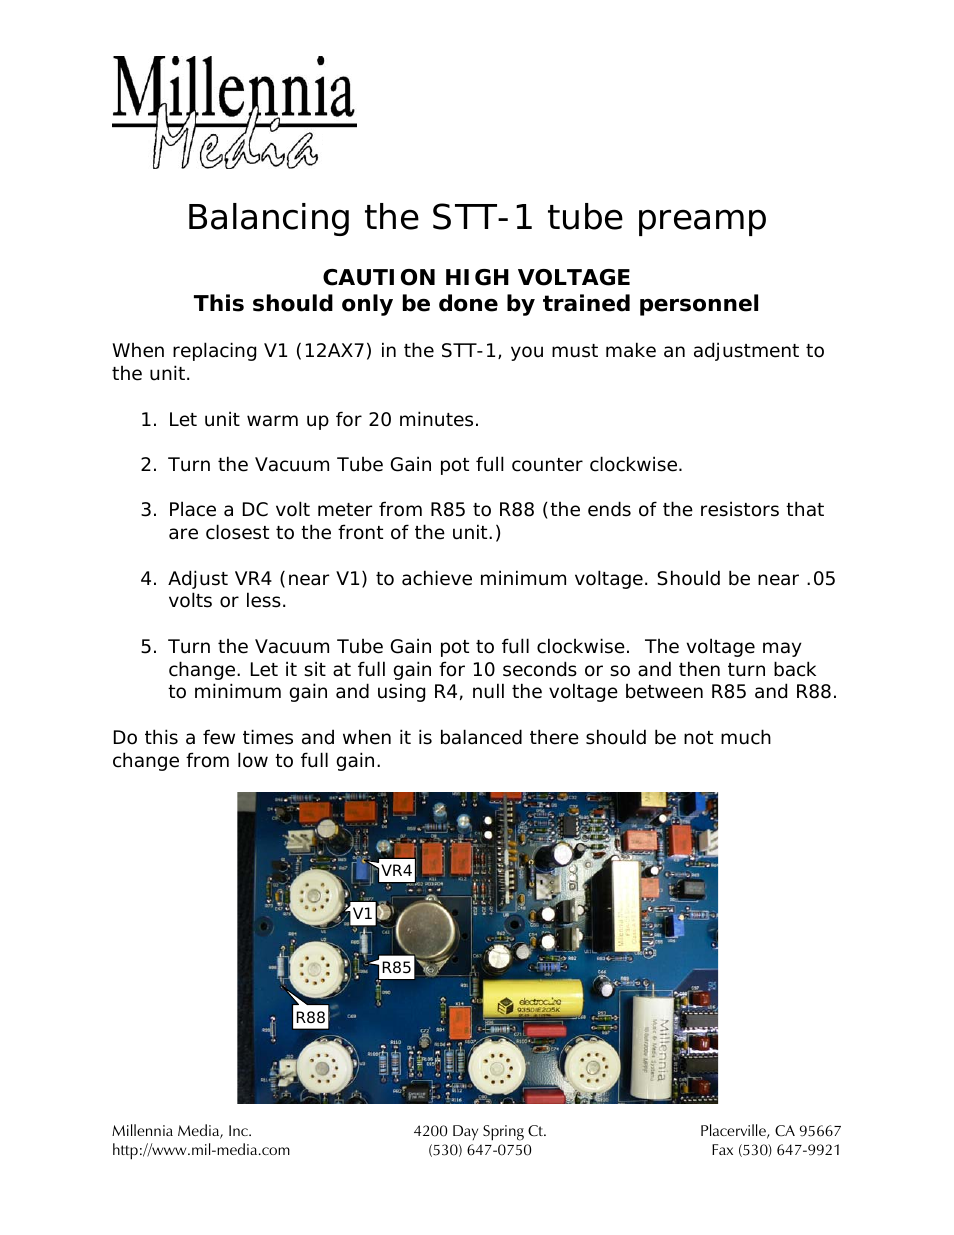 STT-1 Balancing Tube Preamp